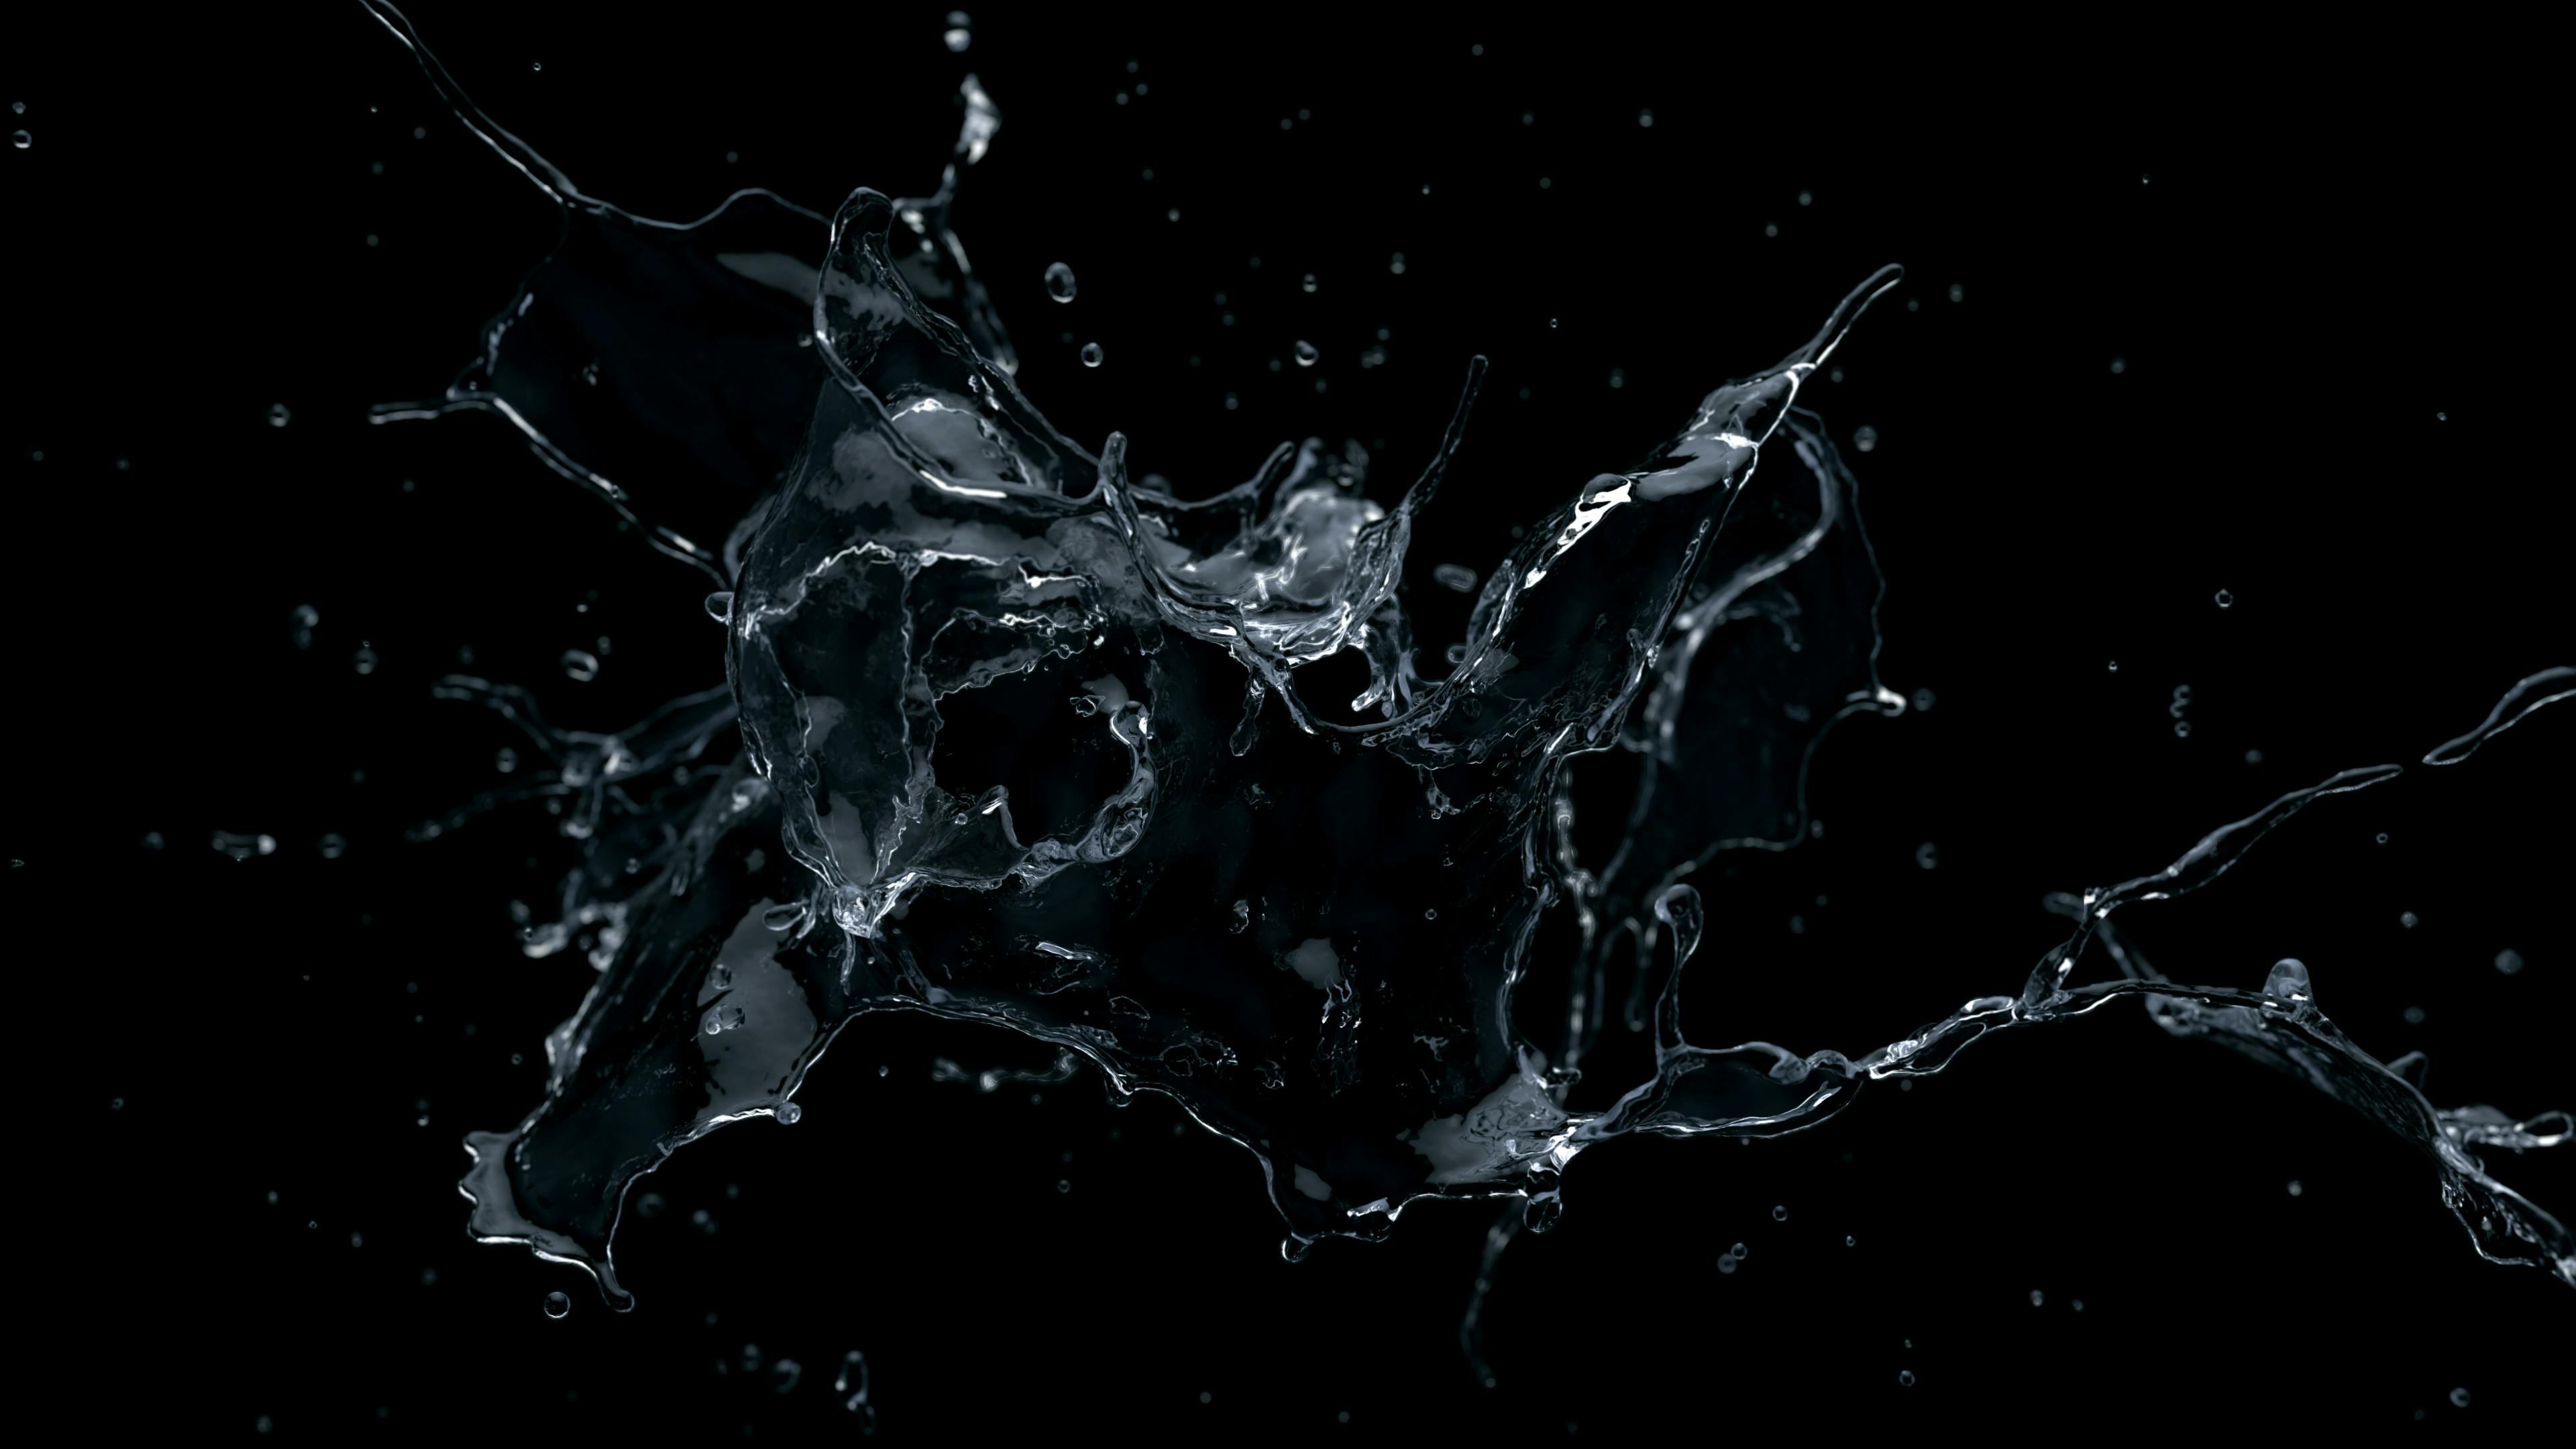 Water Splashing on Black Background · Free Stock Photo